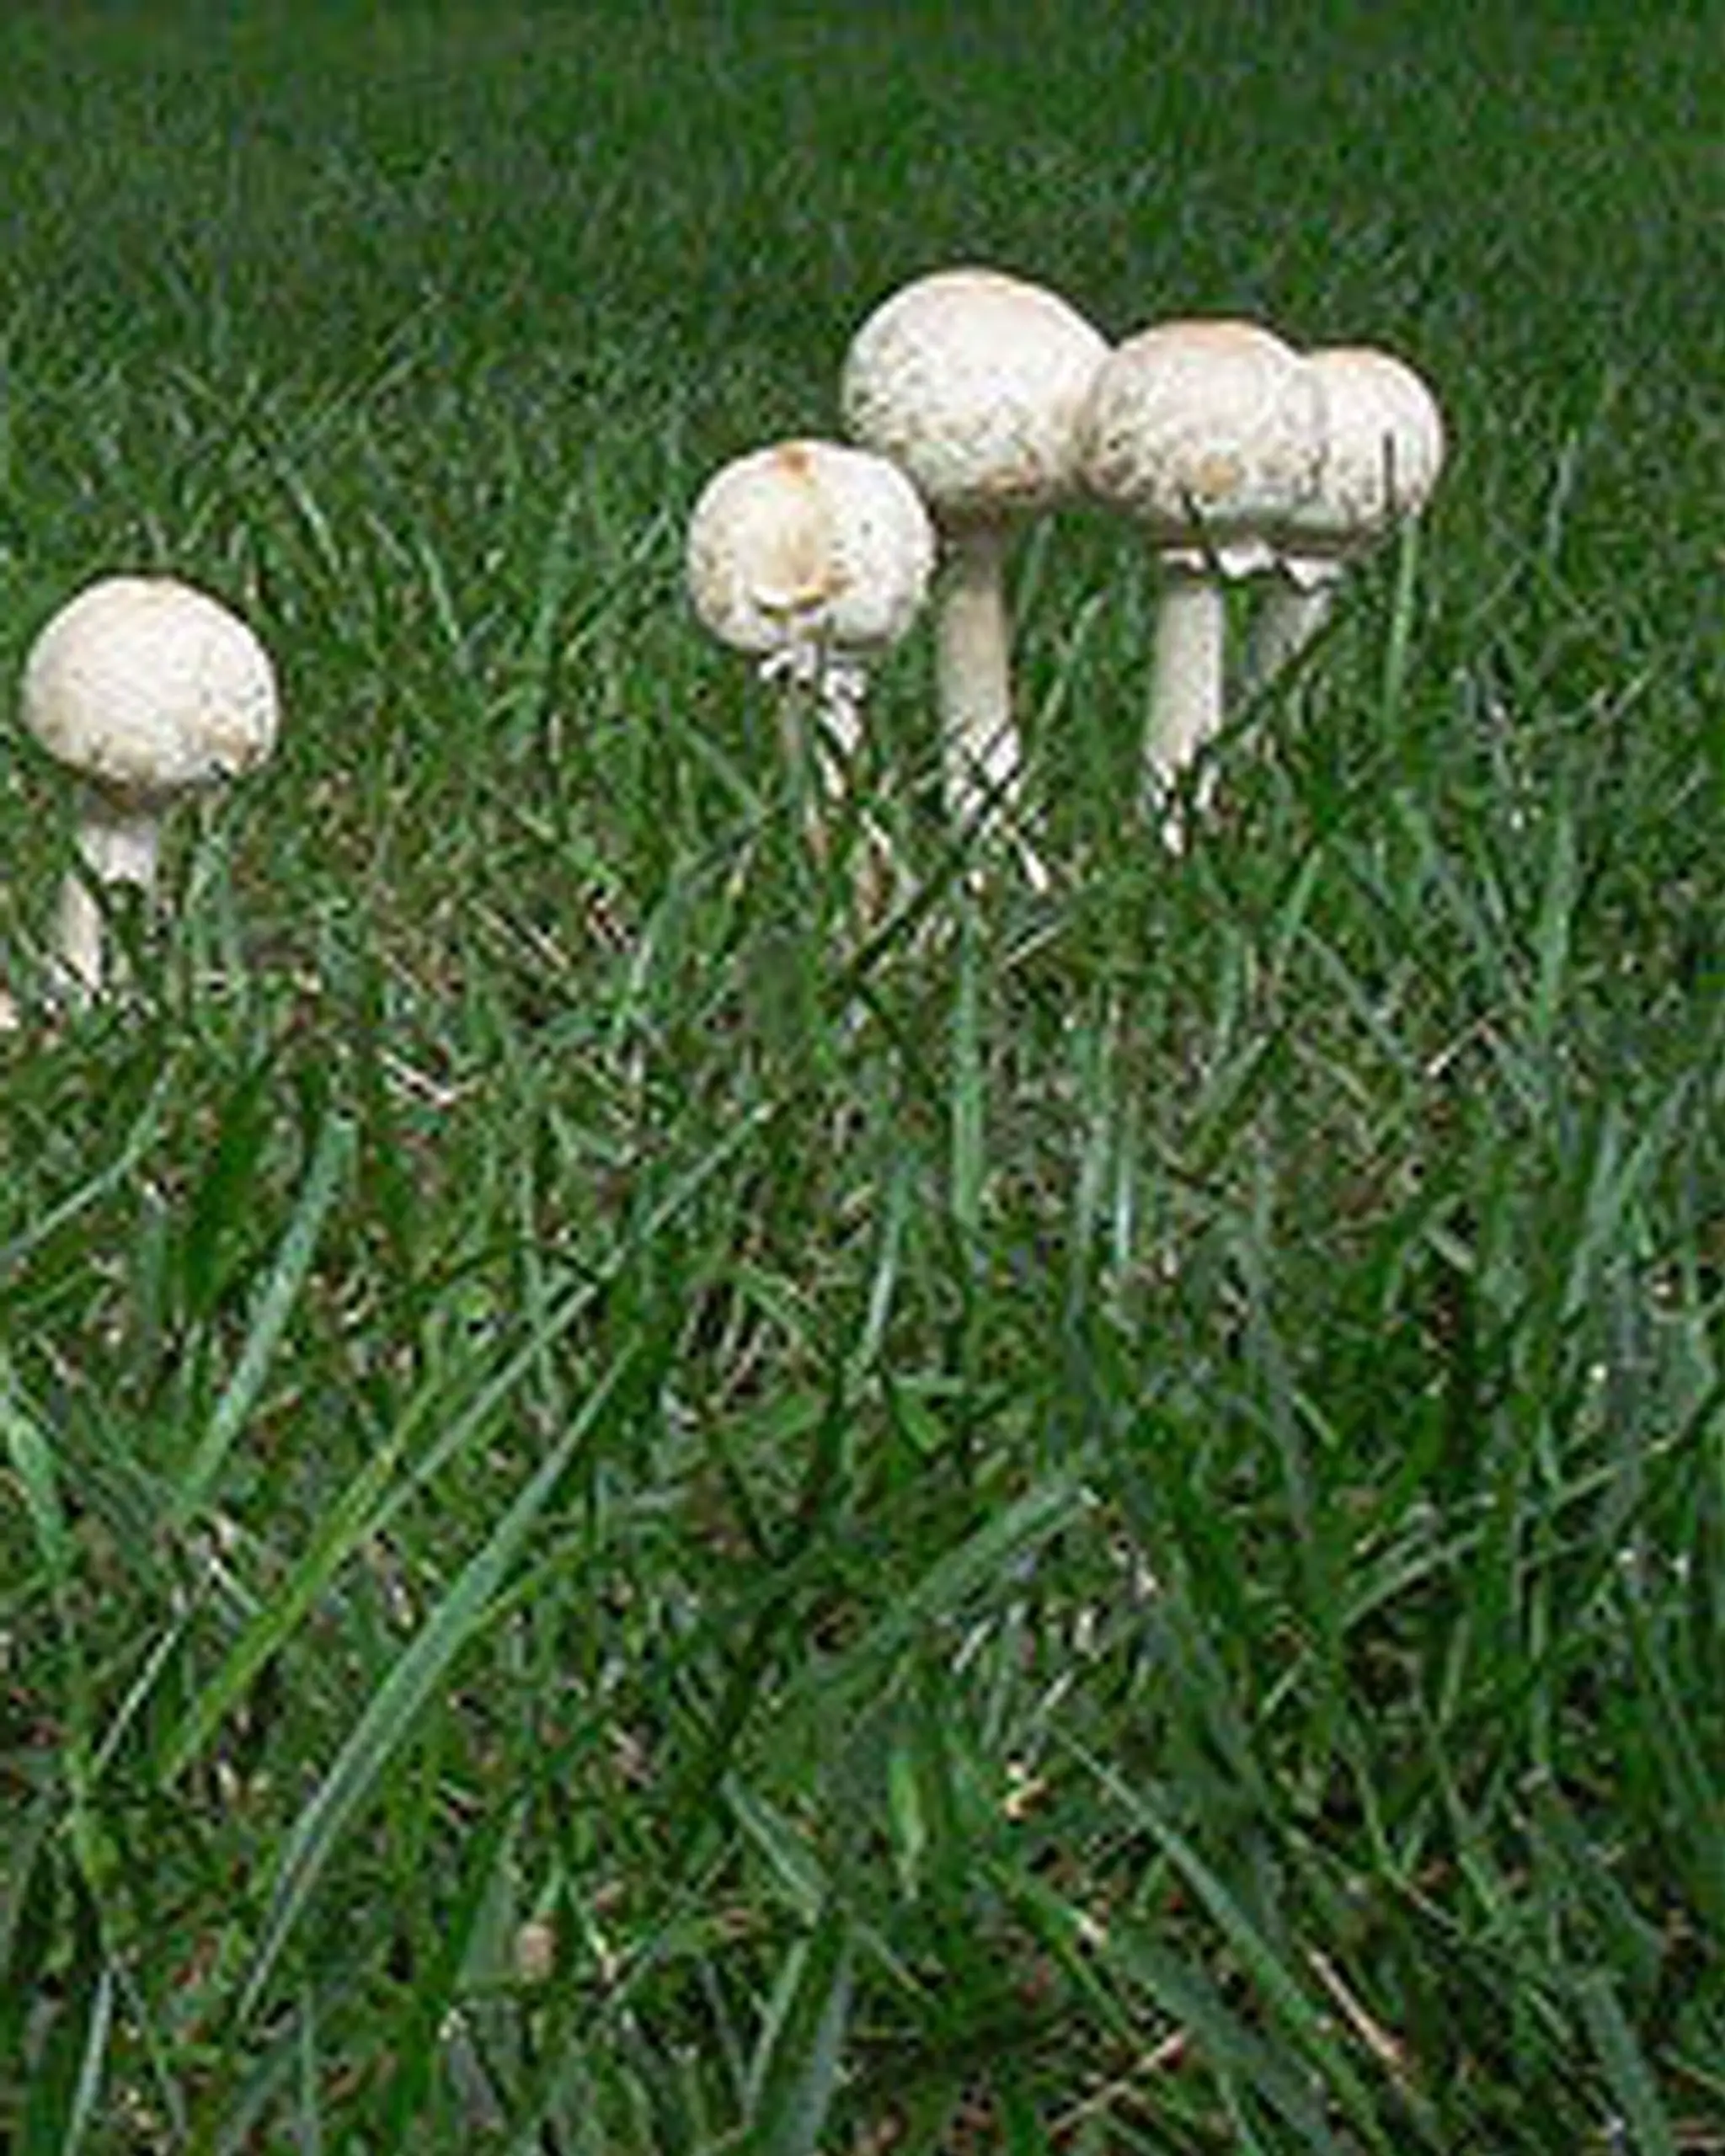 Mushrooms in lawns?